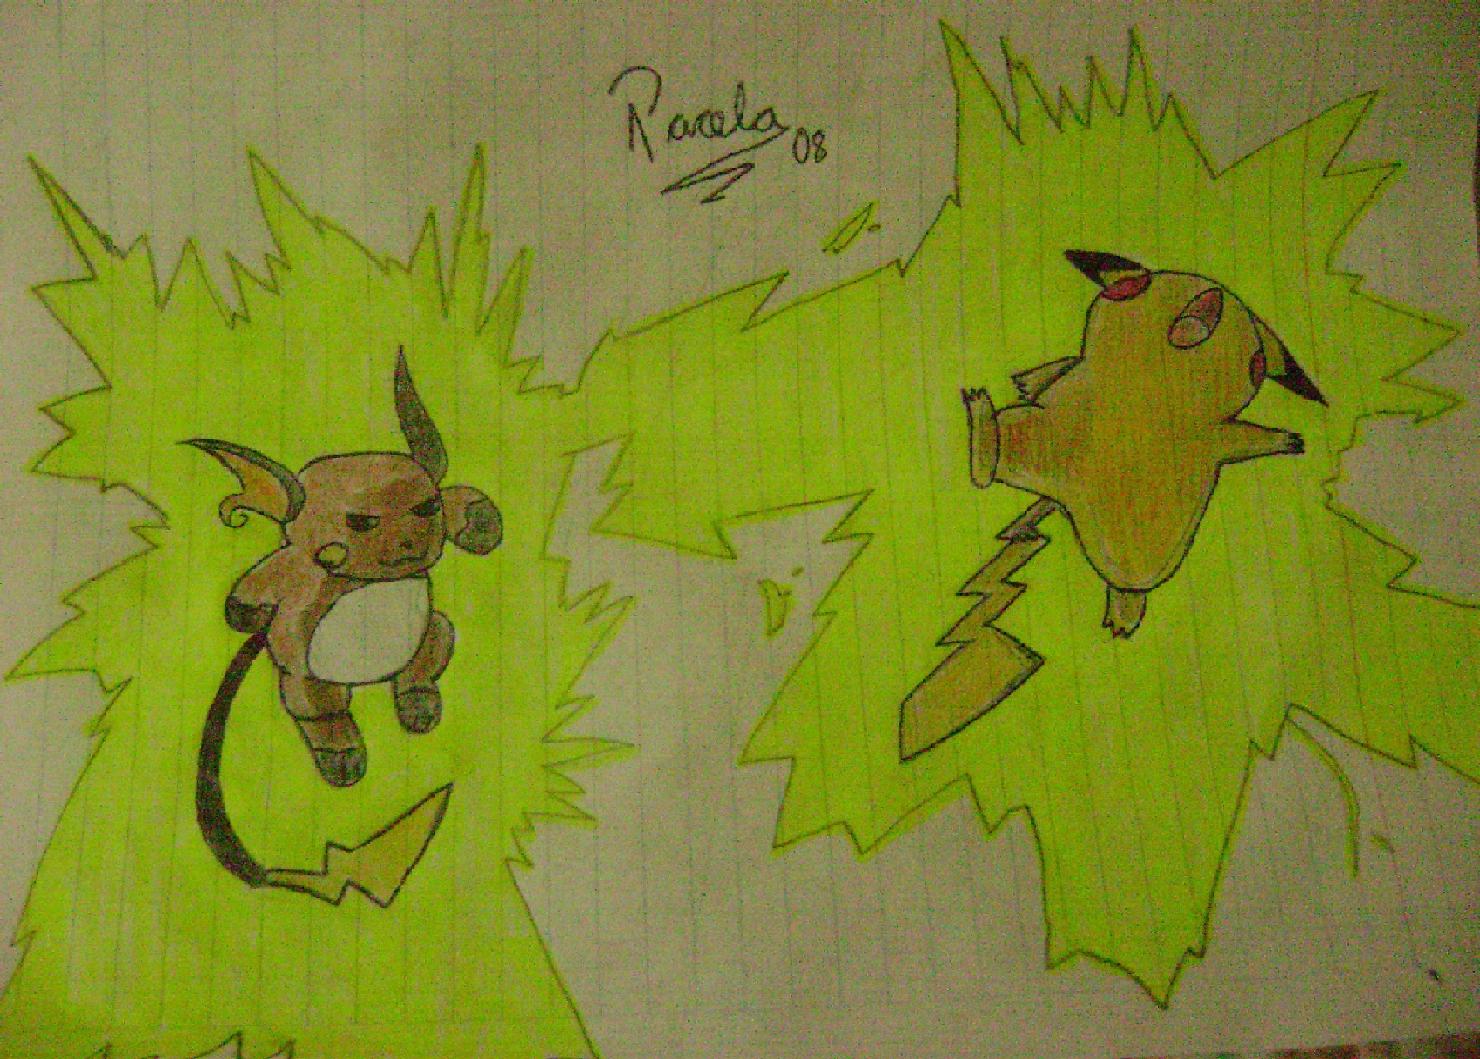 Raichu owns Pikachu by Paola27